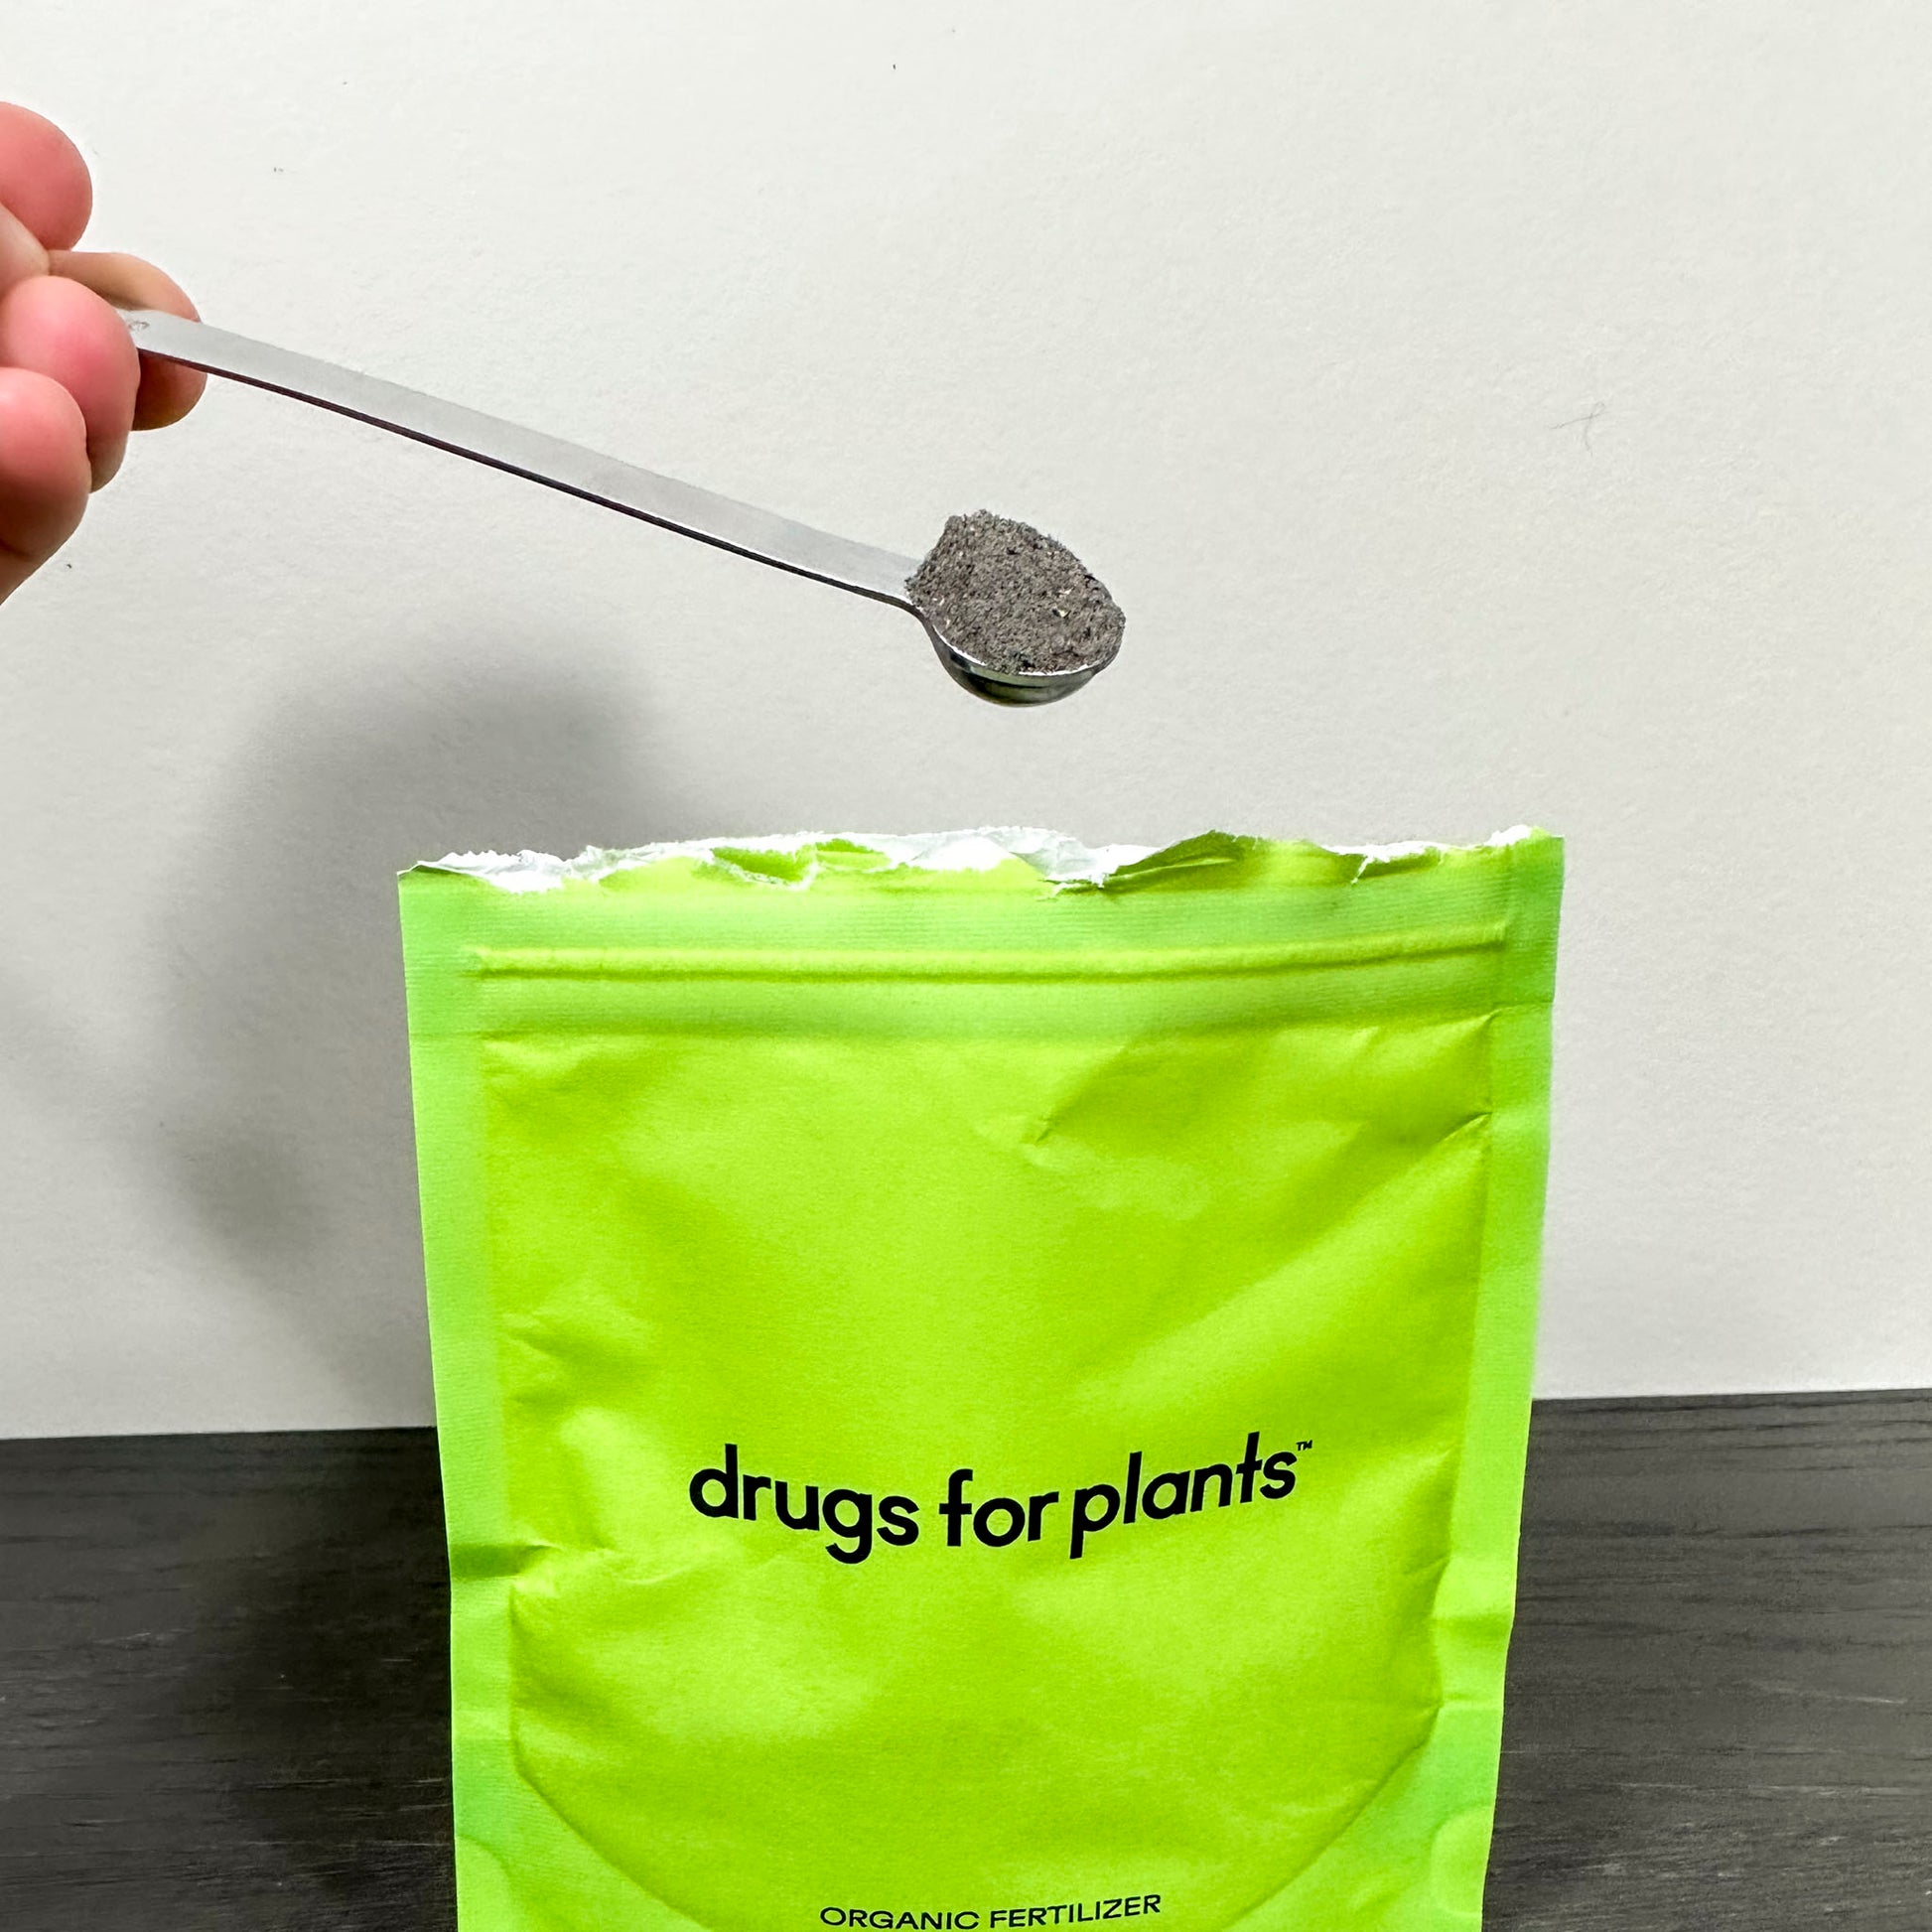 Drugs for plants silver measuring spoon holding fertilizer